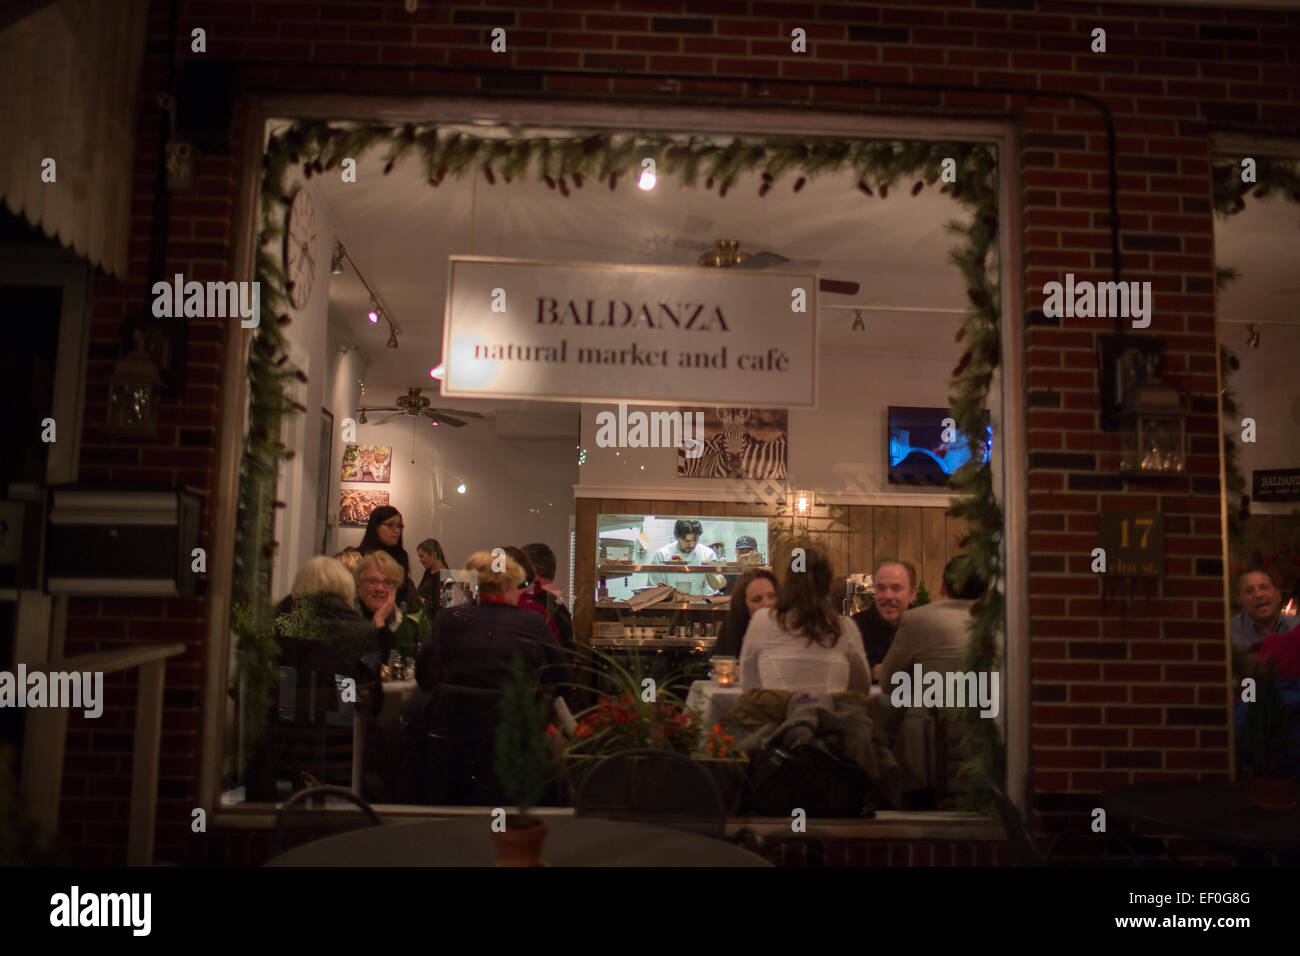 Kunden Baldanza Markt &amp; Cafe in New Canaan, Connecticut. Stockfoto